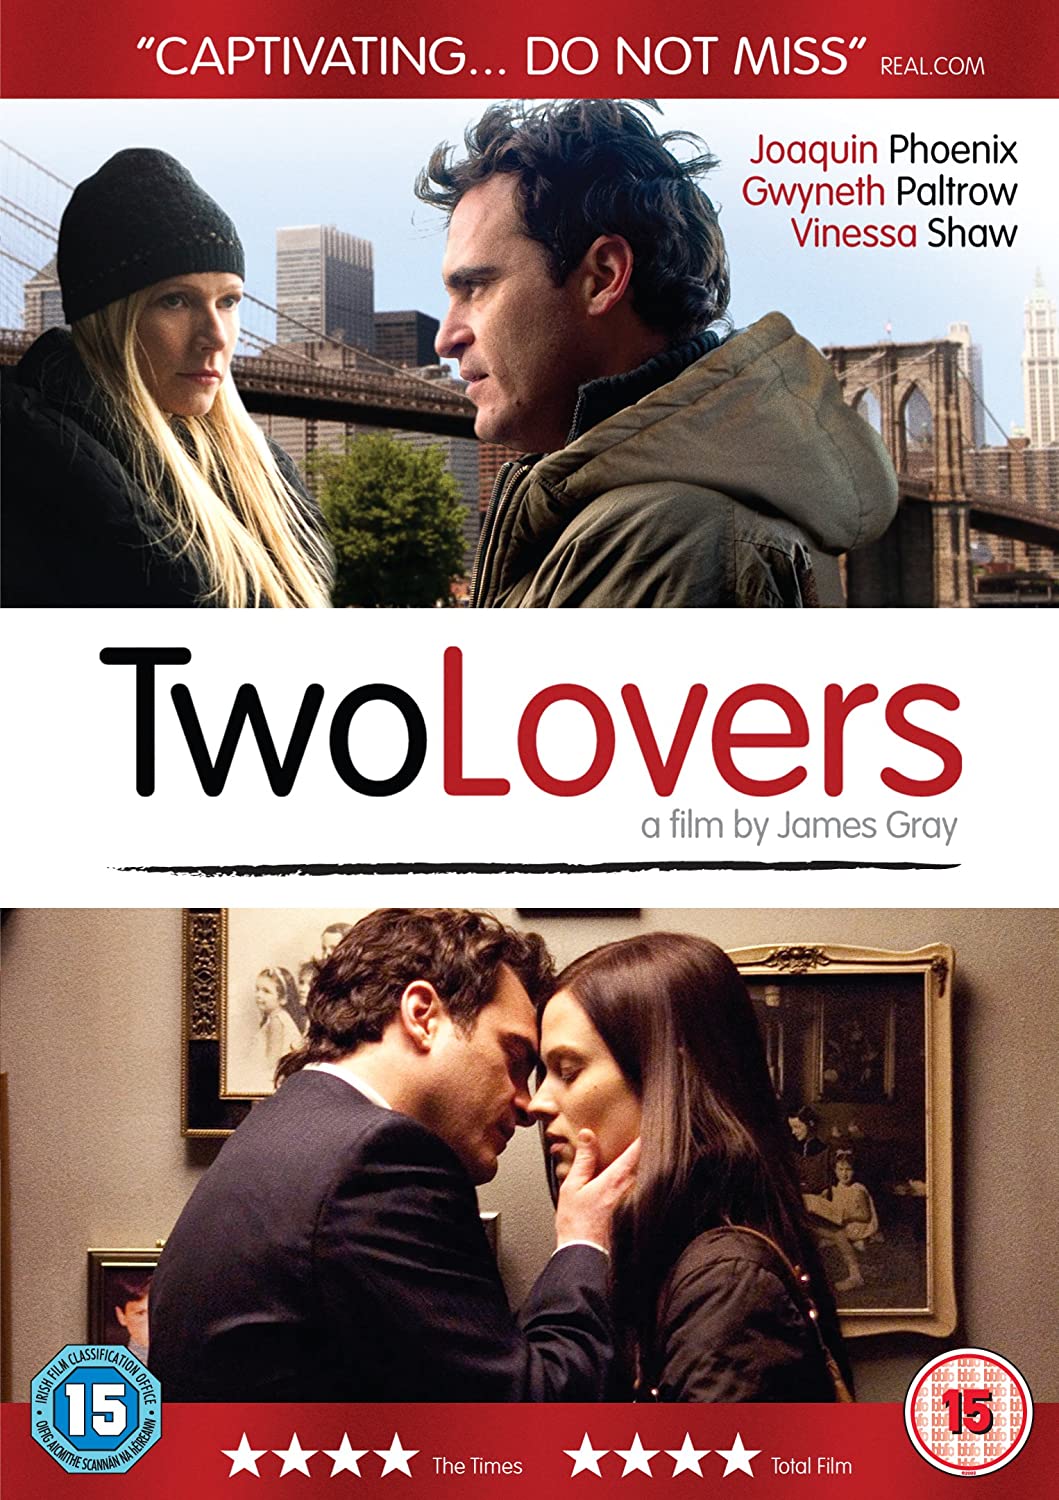 Two Lovers - Romance/Drama [DVD]